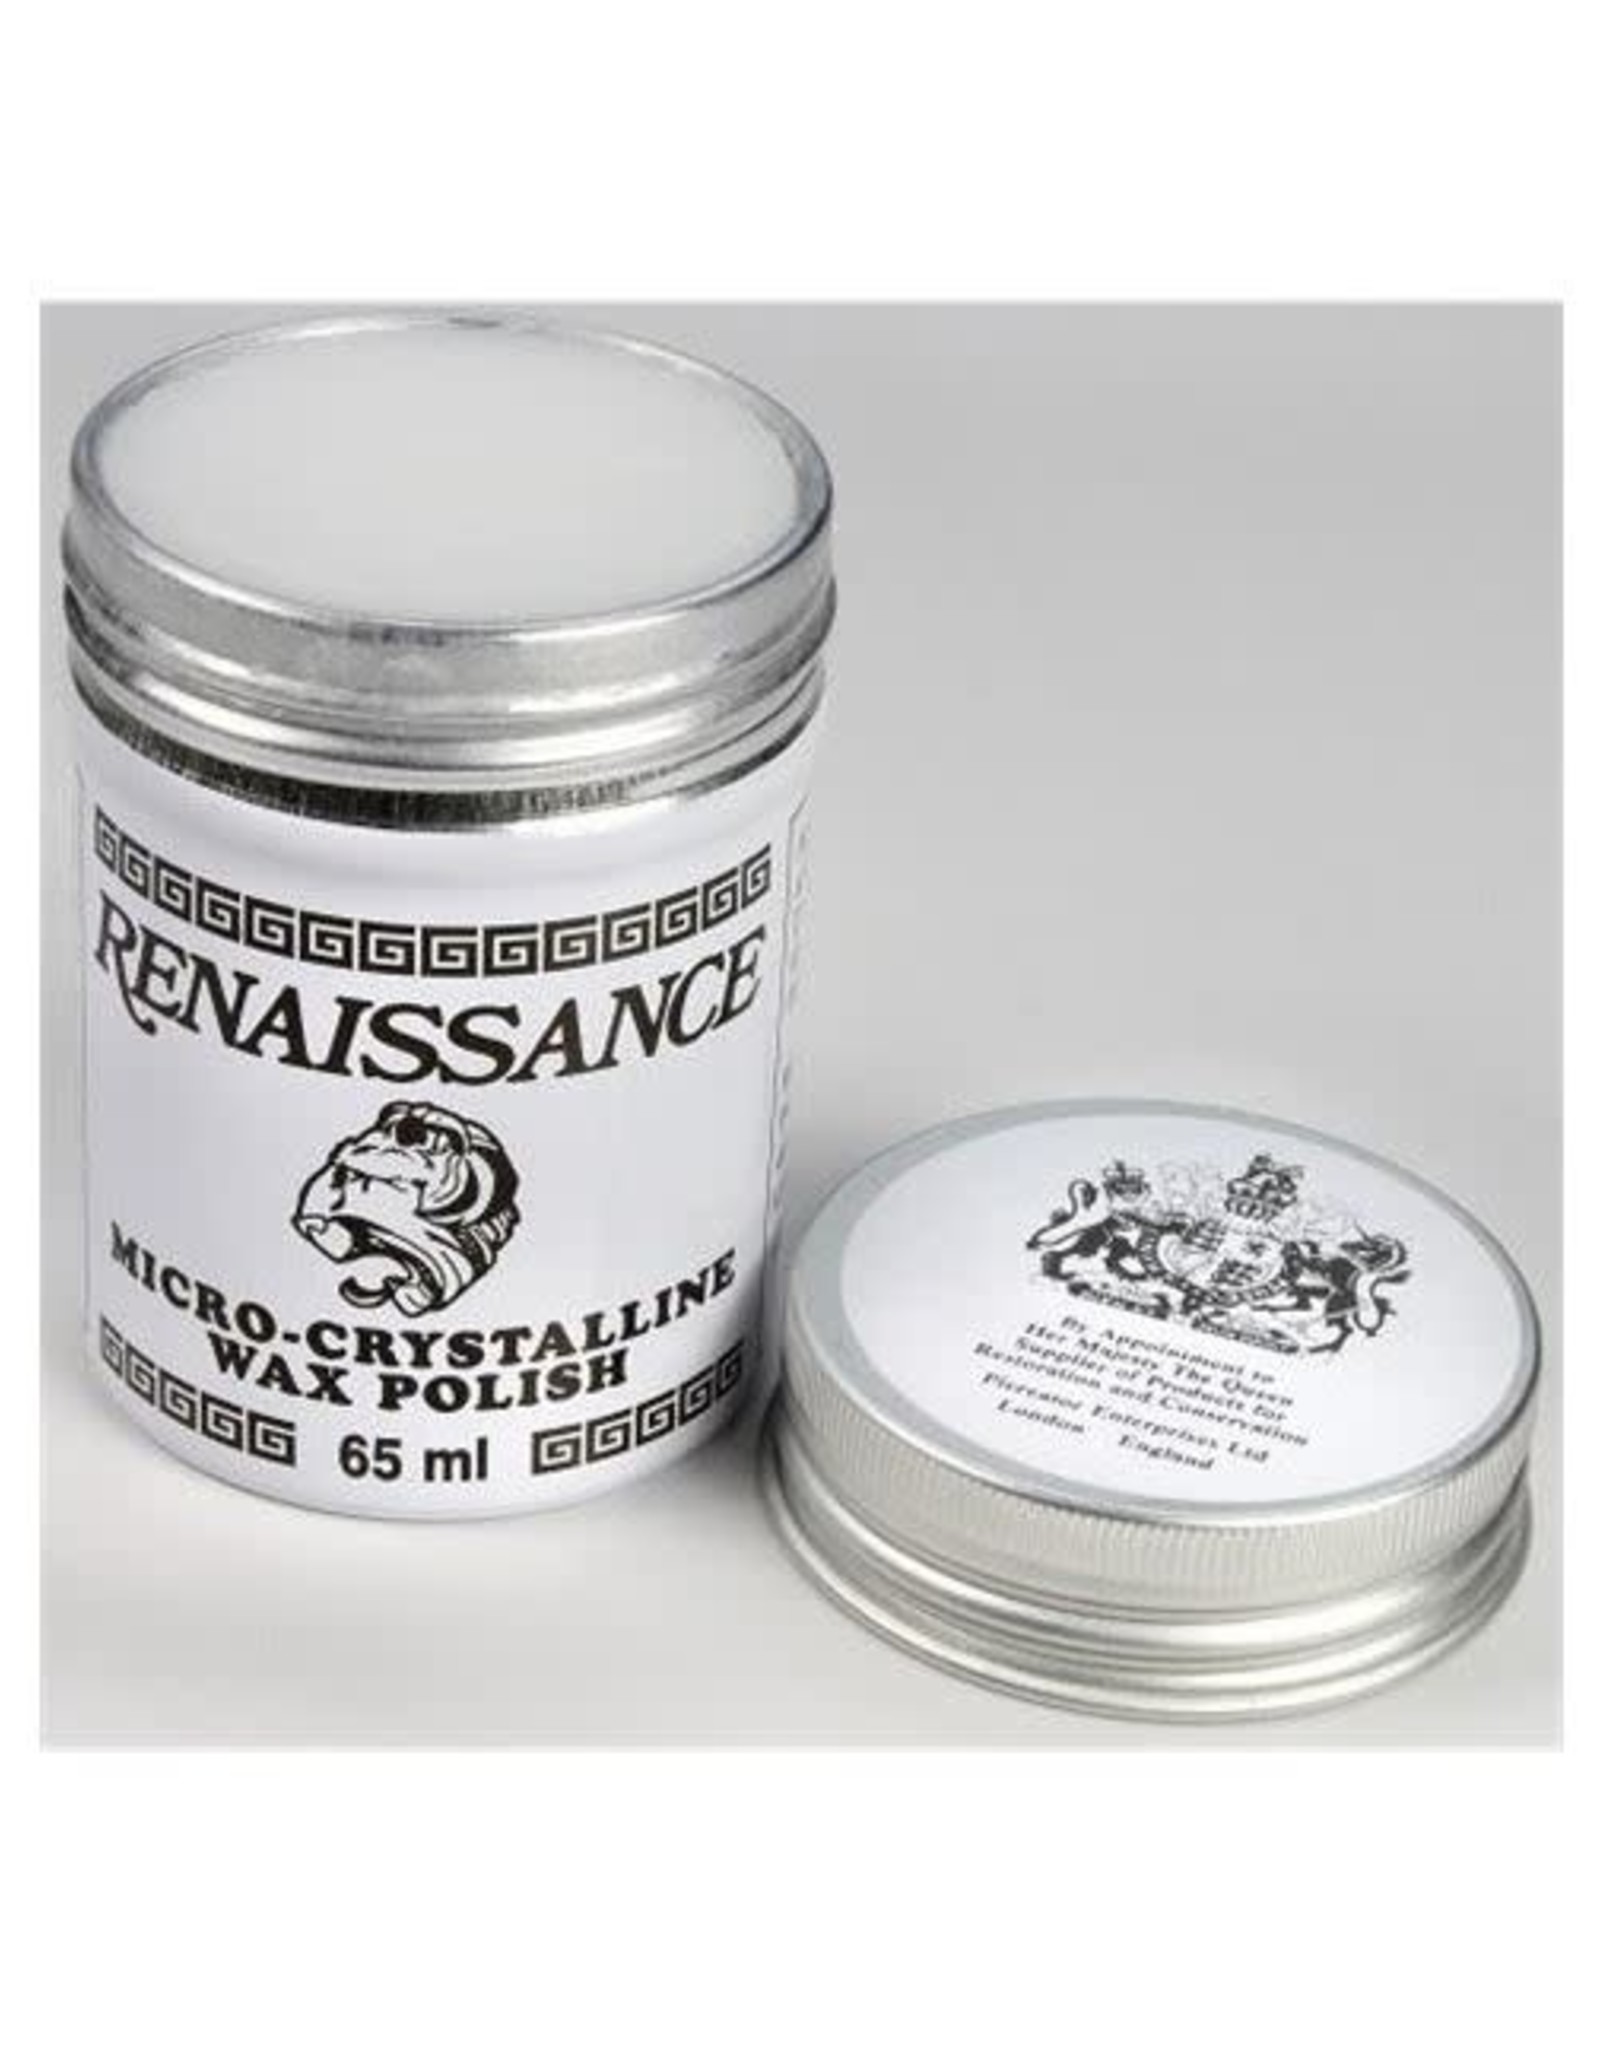 Renaissance Micro-Crystalline Wax - 2.25 fl. oz. (65ml)